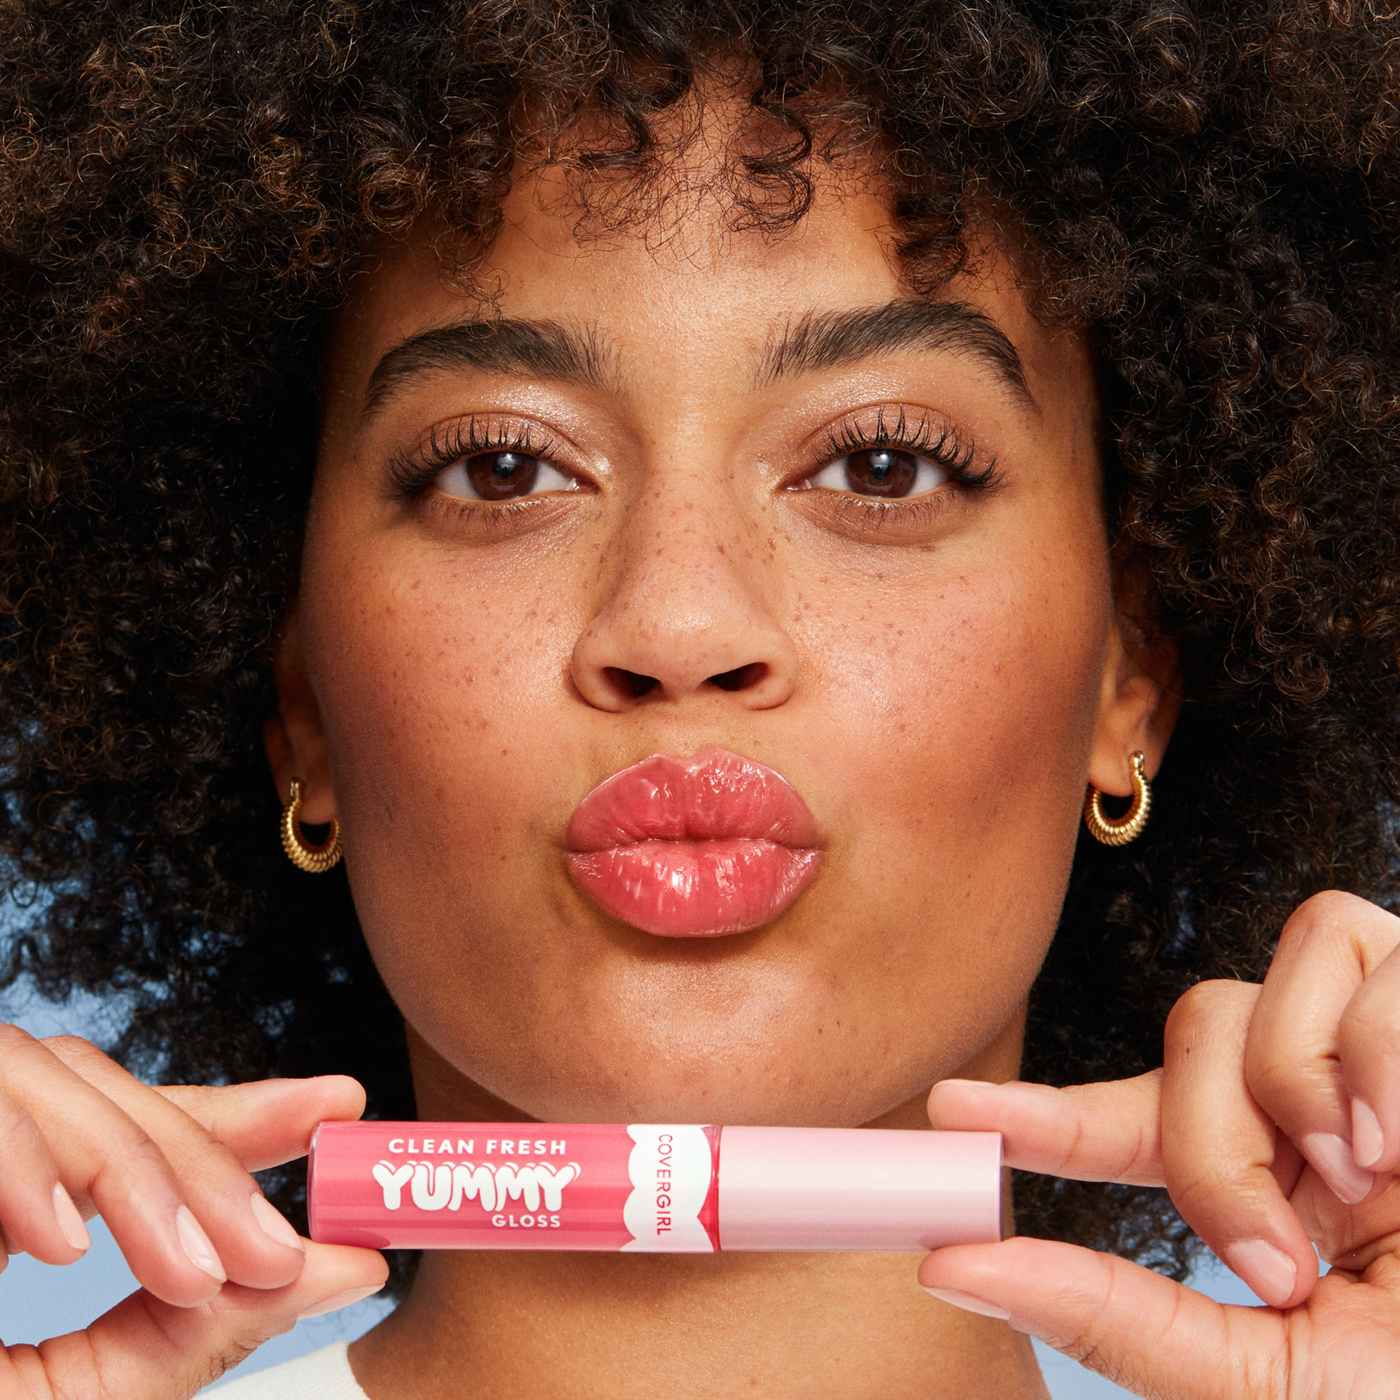 Covergirl Clean Fresh Yummy Lip Gloss - Sugar Poppy; image 5 of 10